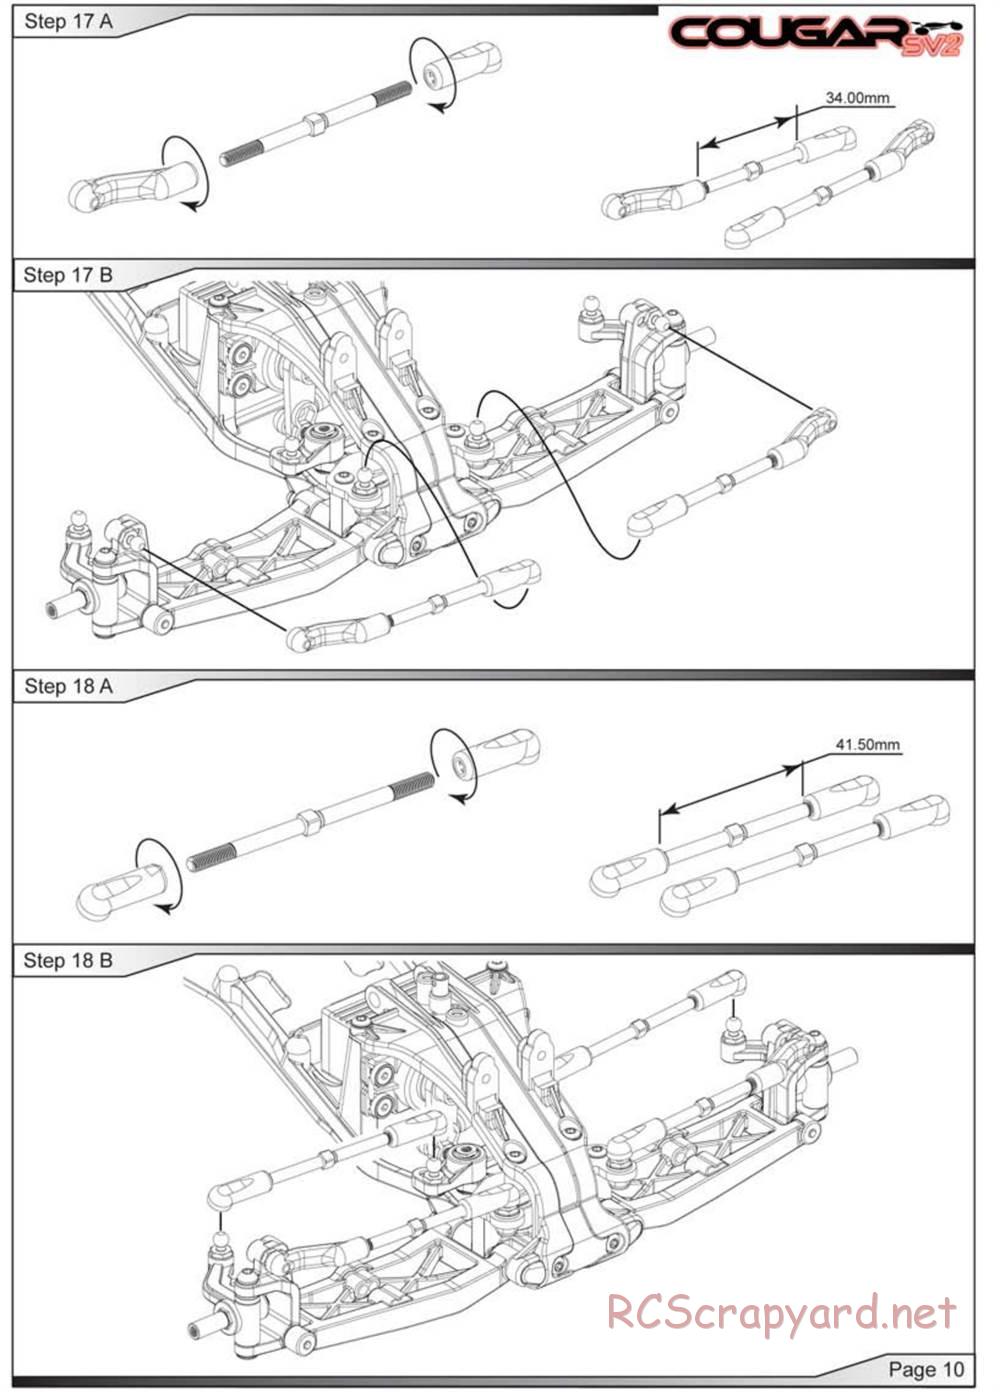 Schumacher - Cougar SV2 - Manual - Page 11